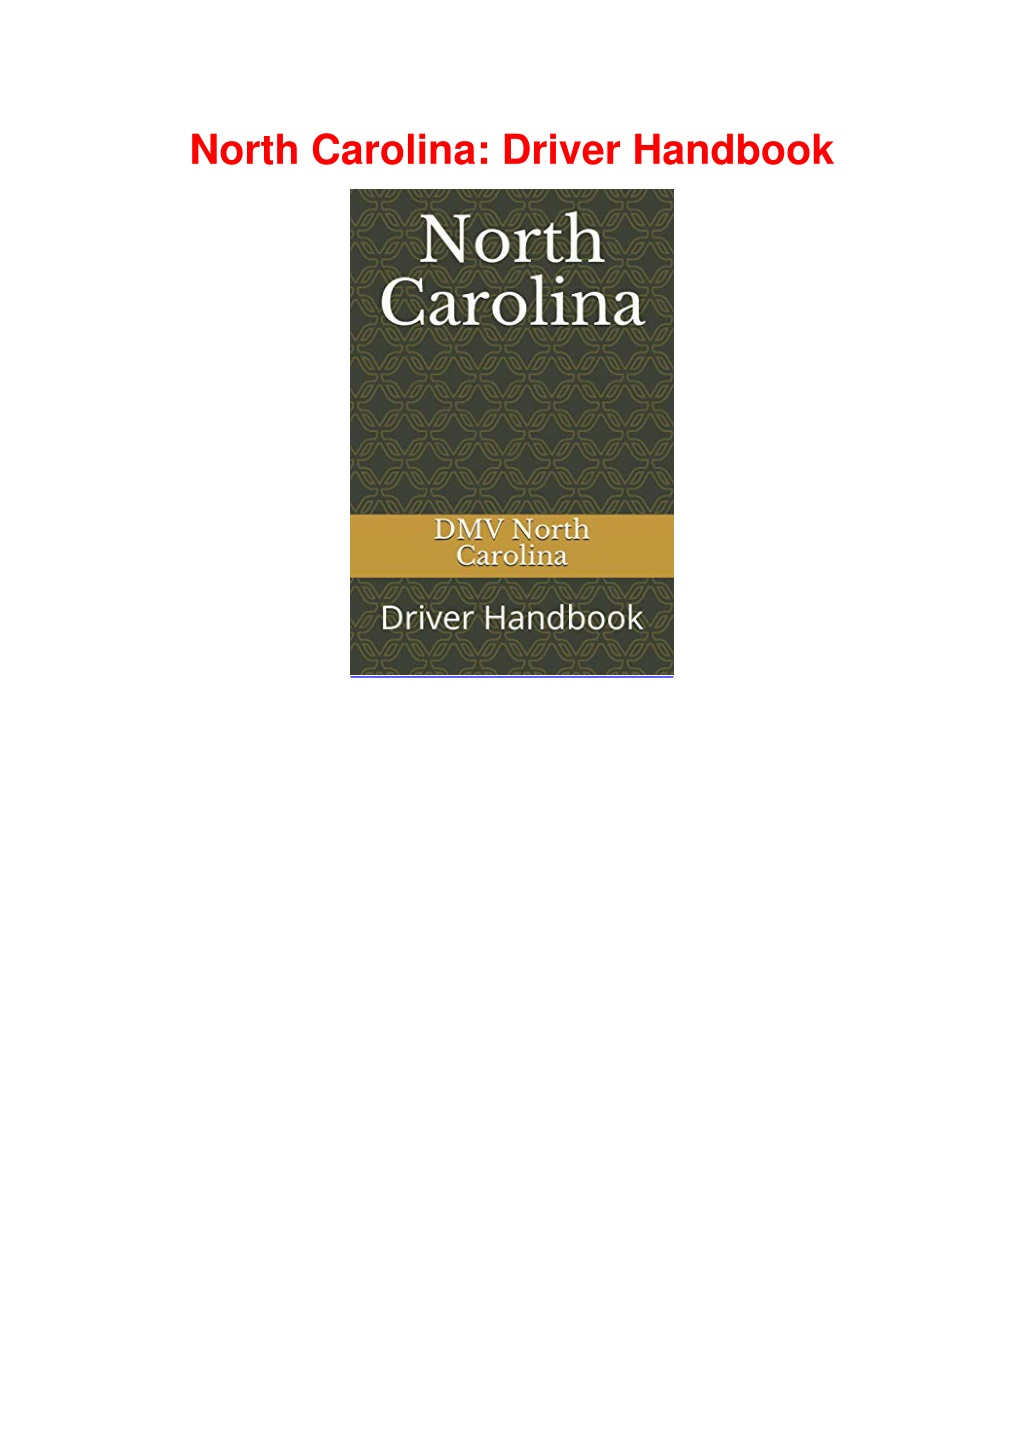 PPT PDF/BOOK North Carolina Driver Handbook PowerPoint Presentation